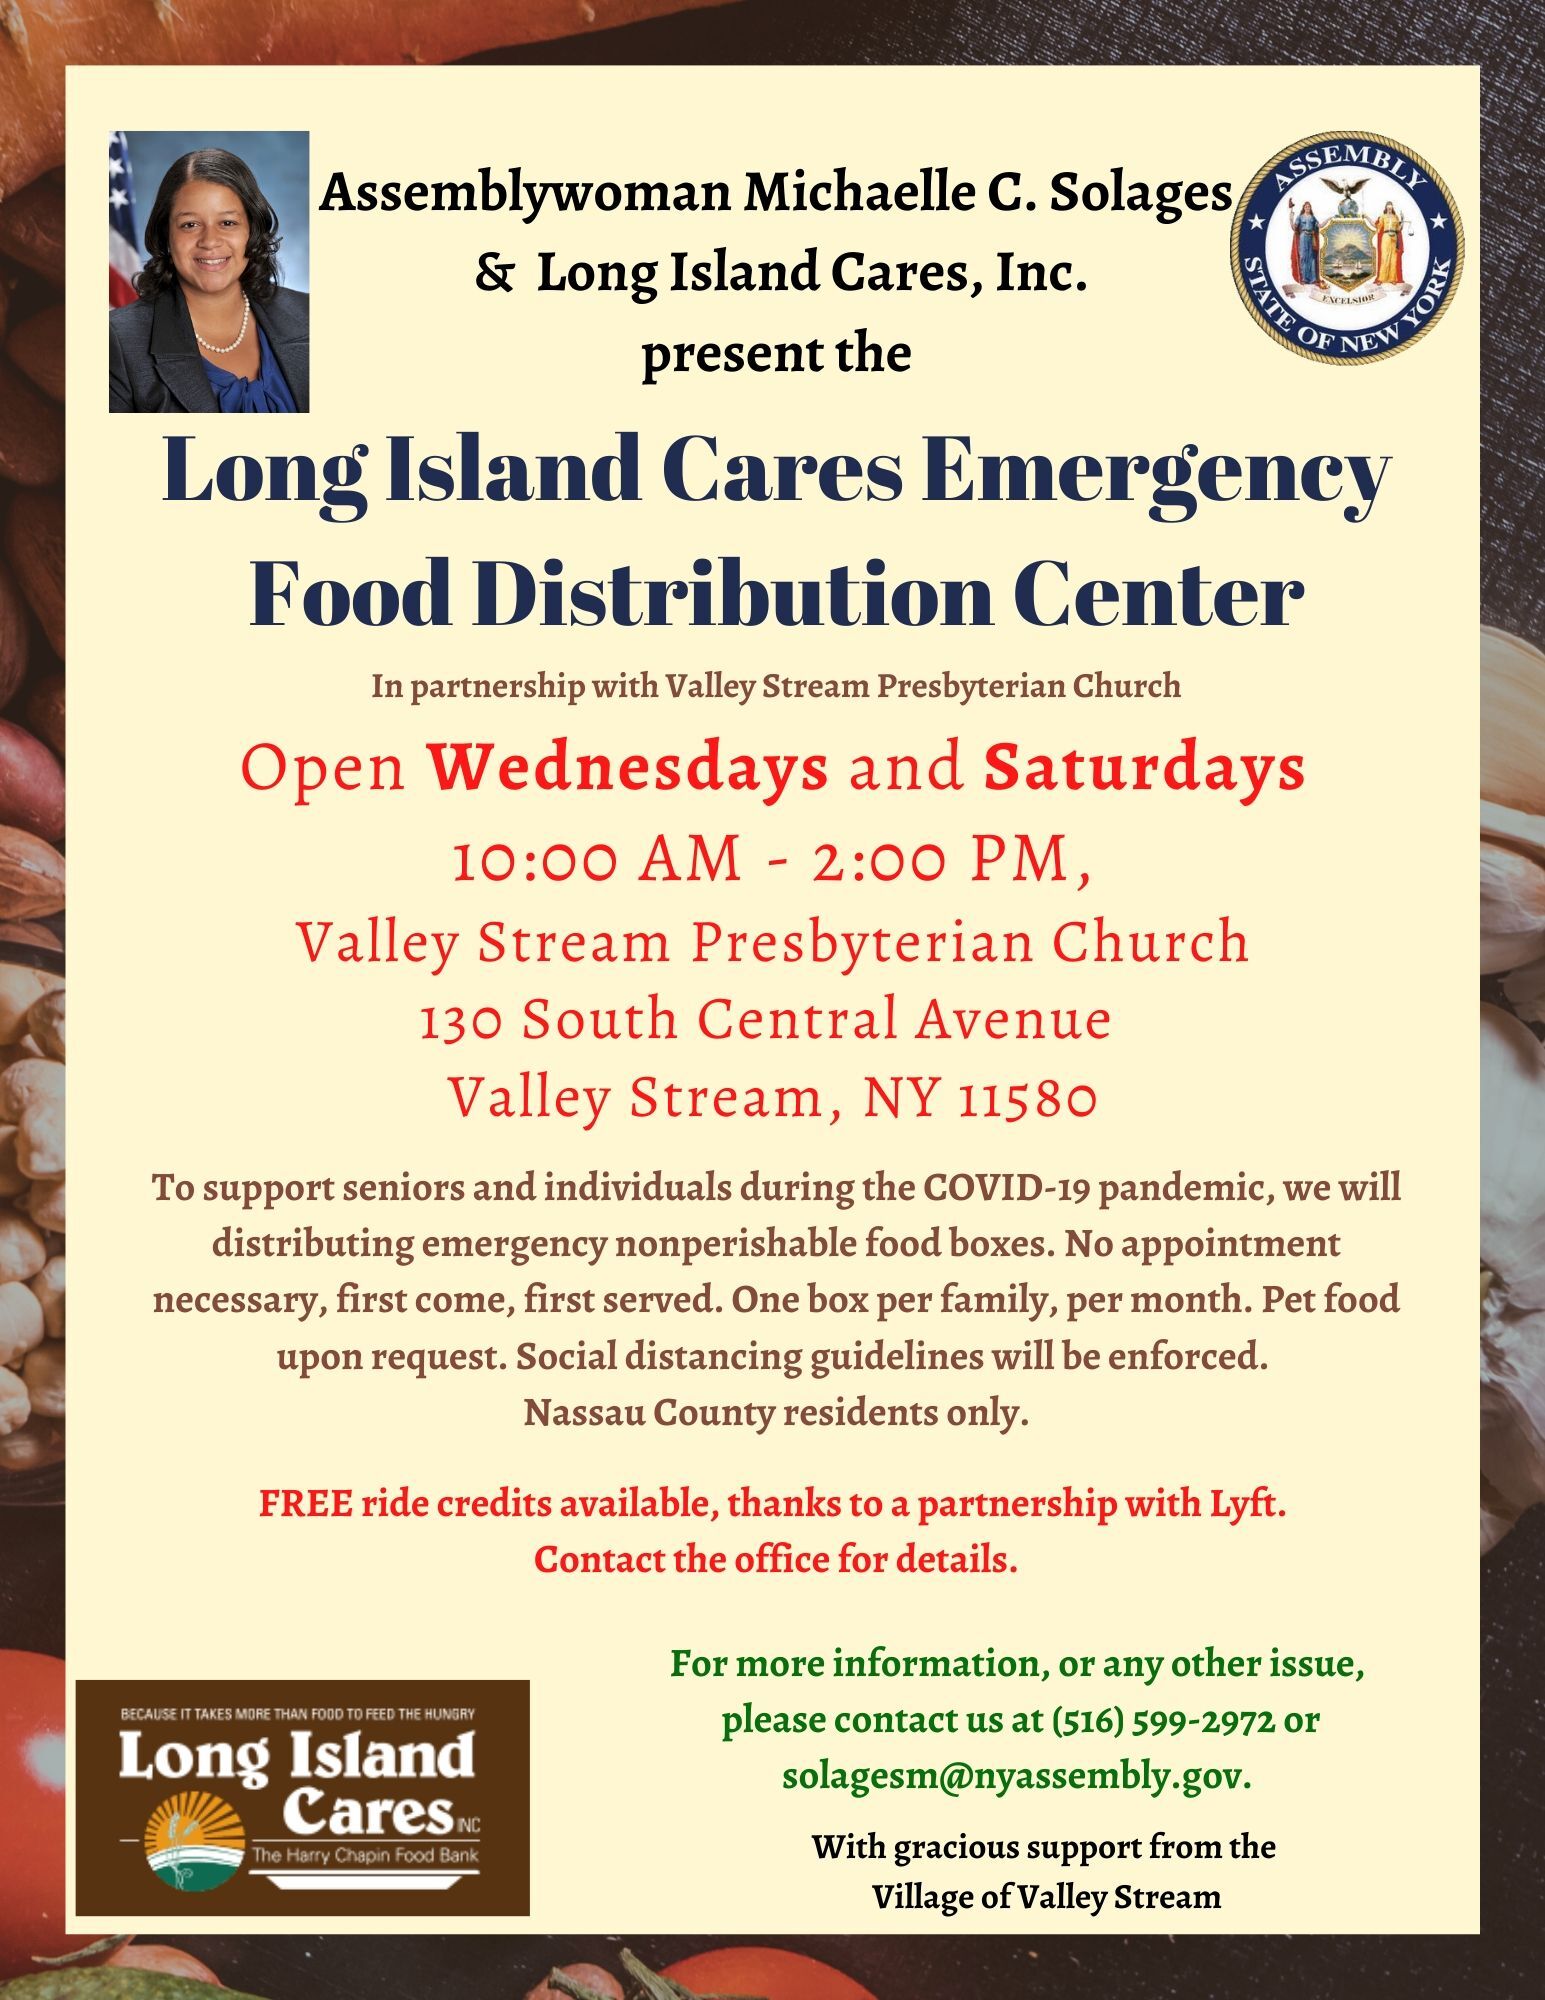 Long Island Cares Emergency Food Center Now Open Both Wednesdays & Saturdays